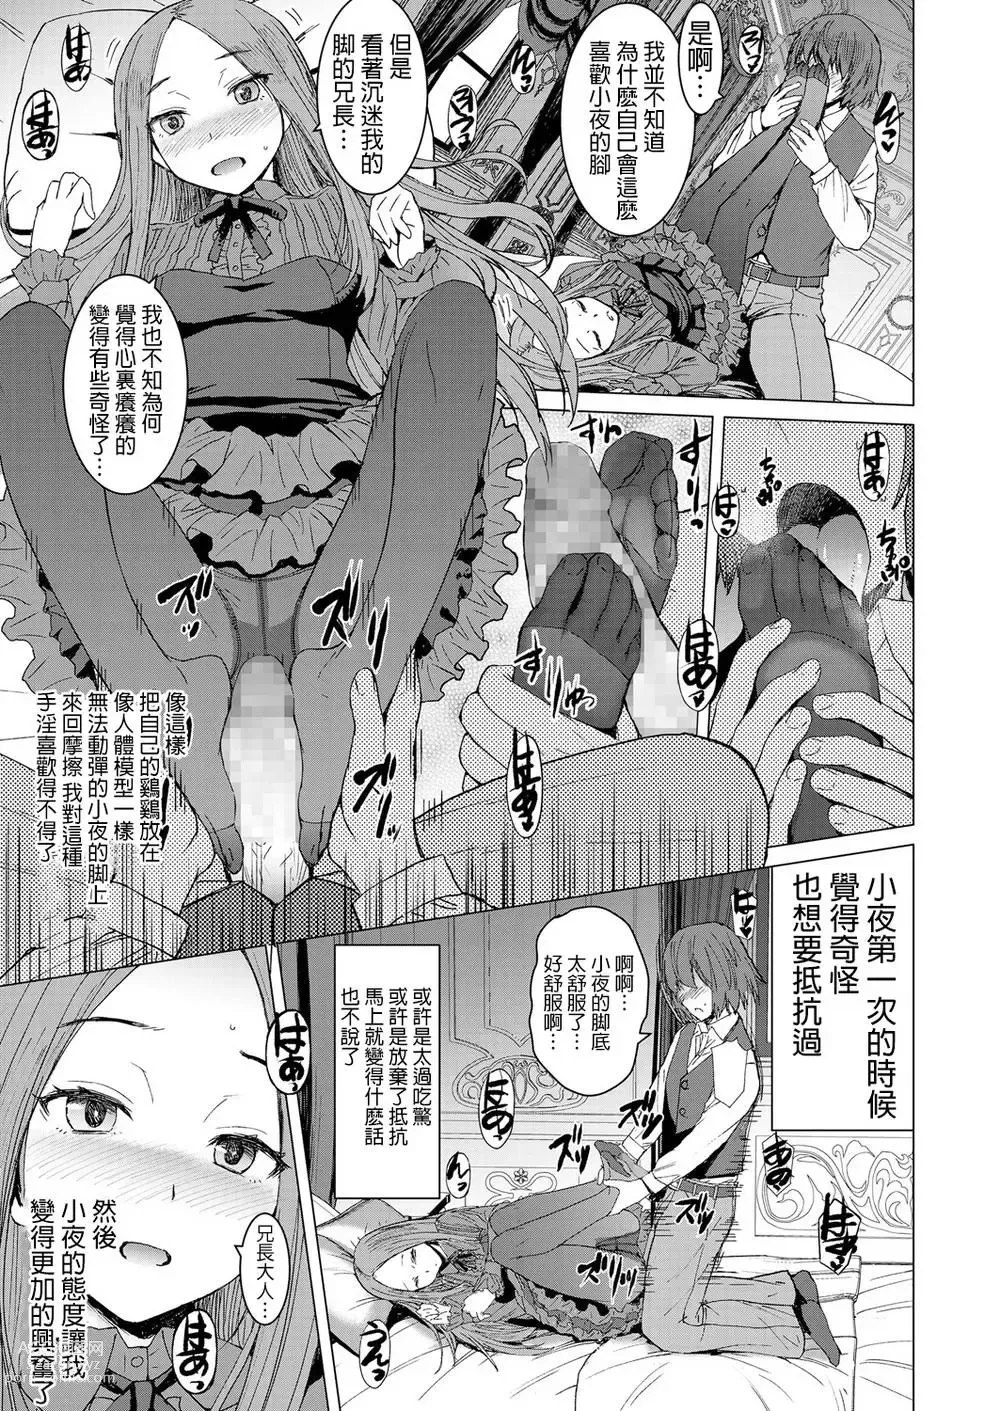 Page 7 of manga Aisarete Miru?